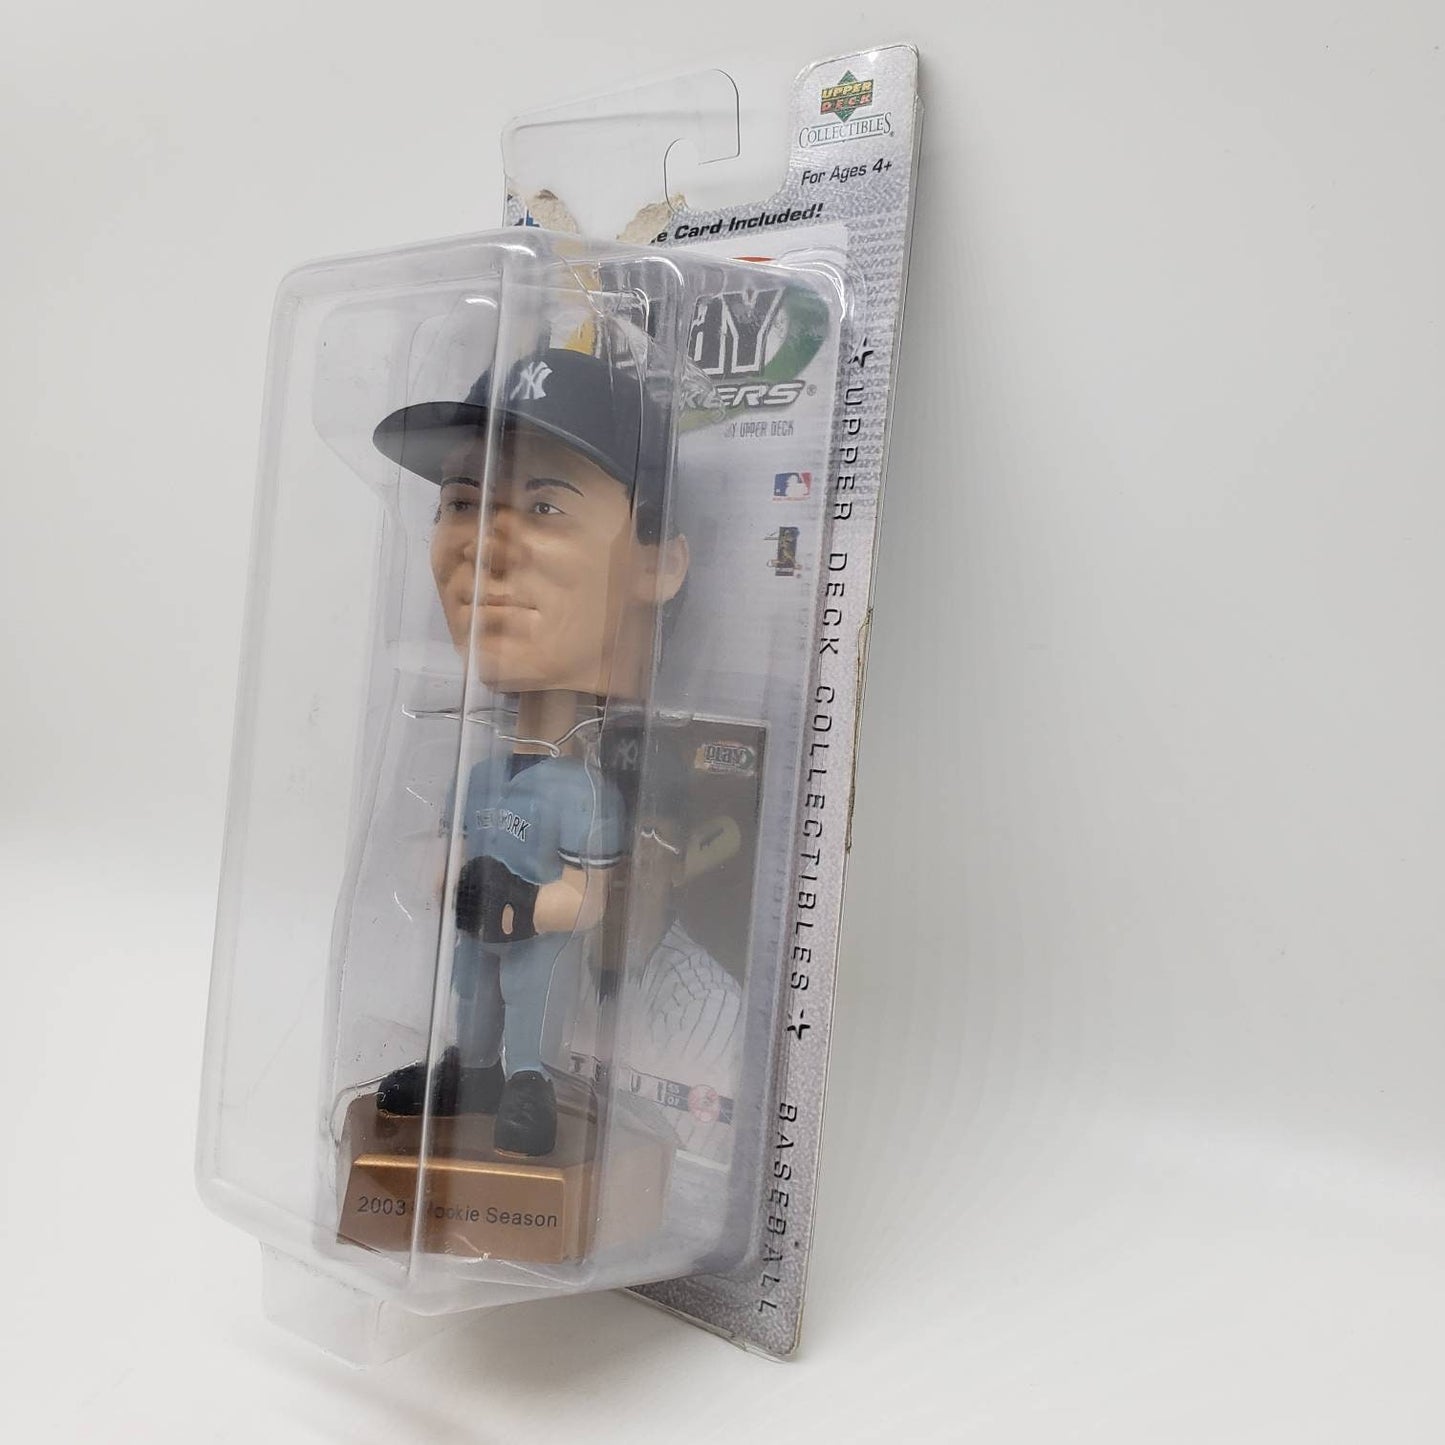 Upper Deck Collectibles New York Yankees Hideki Matsui Bobblehead